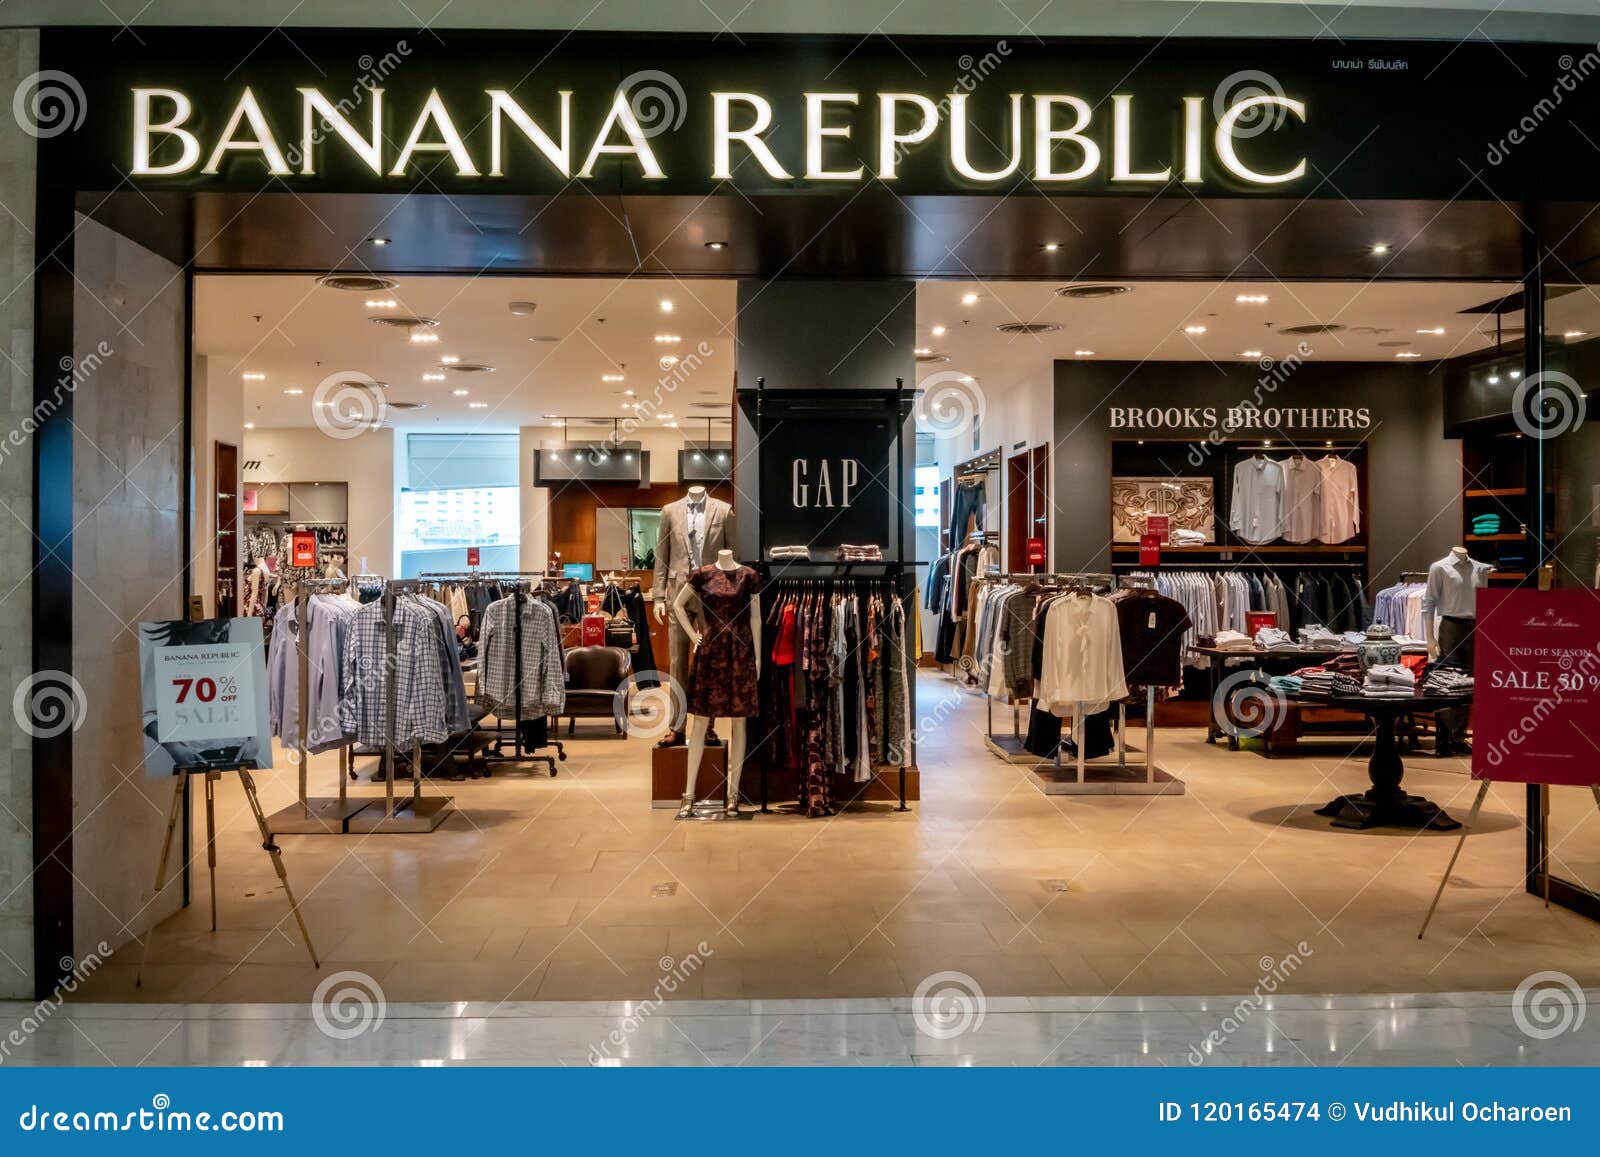 The Banana Republic at Emquatier, Bangkok, Thailand, June 29, 2018 ...